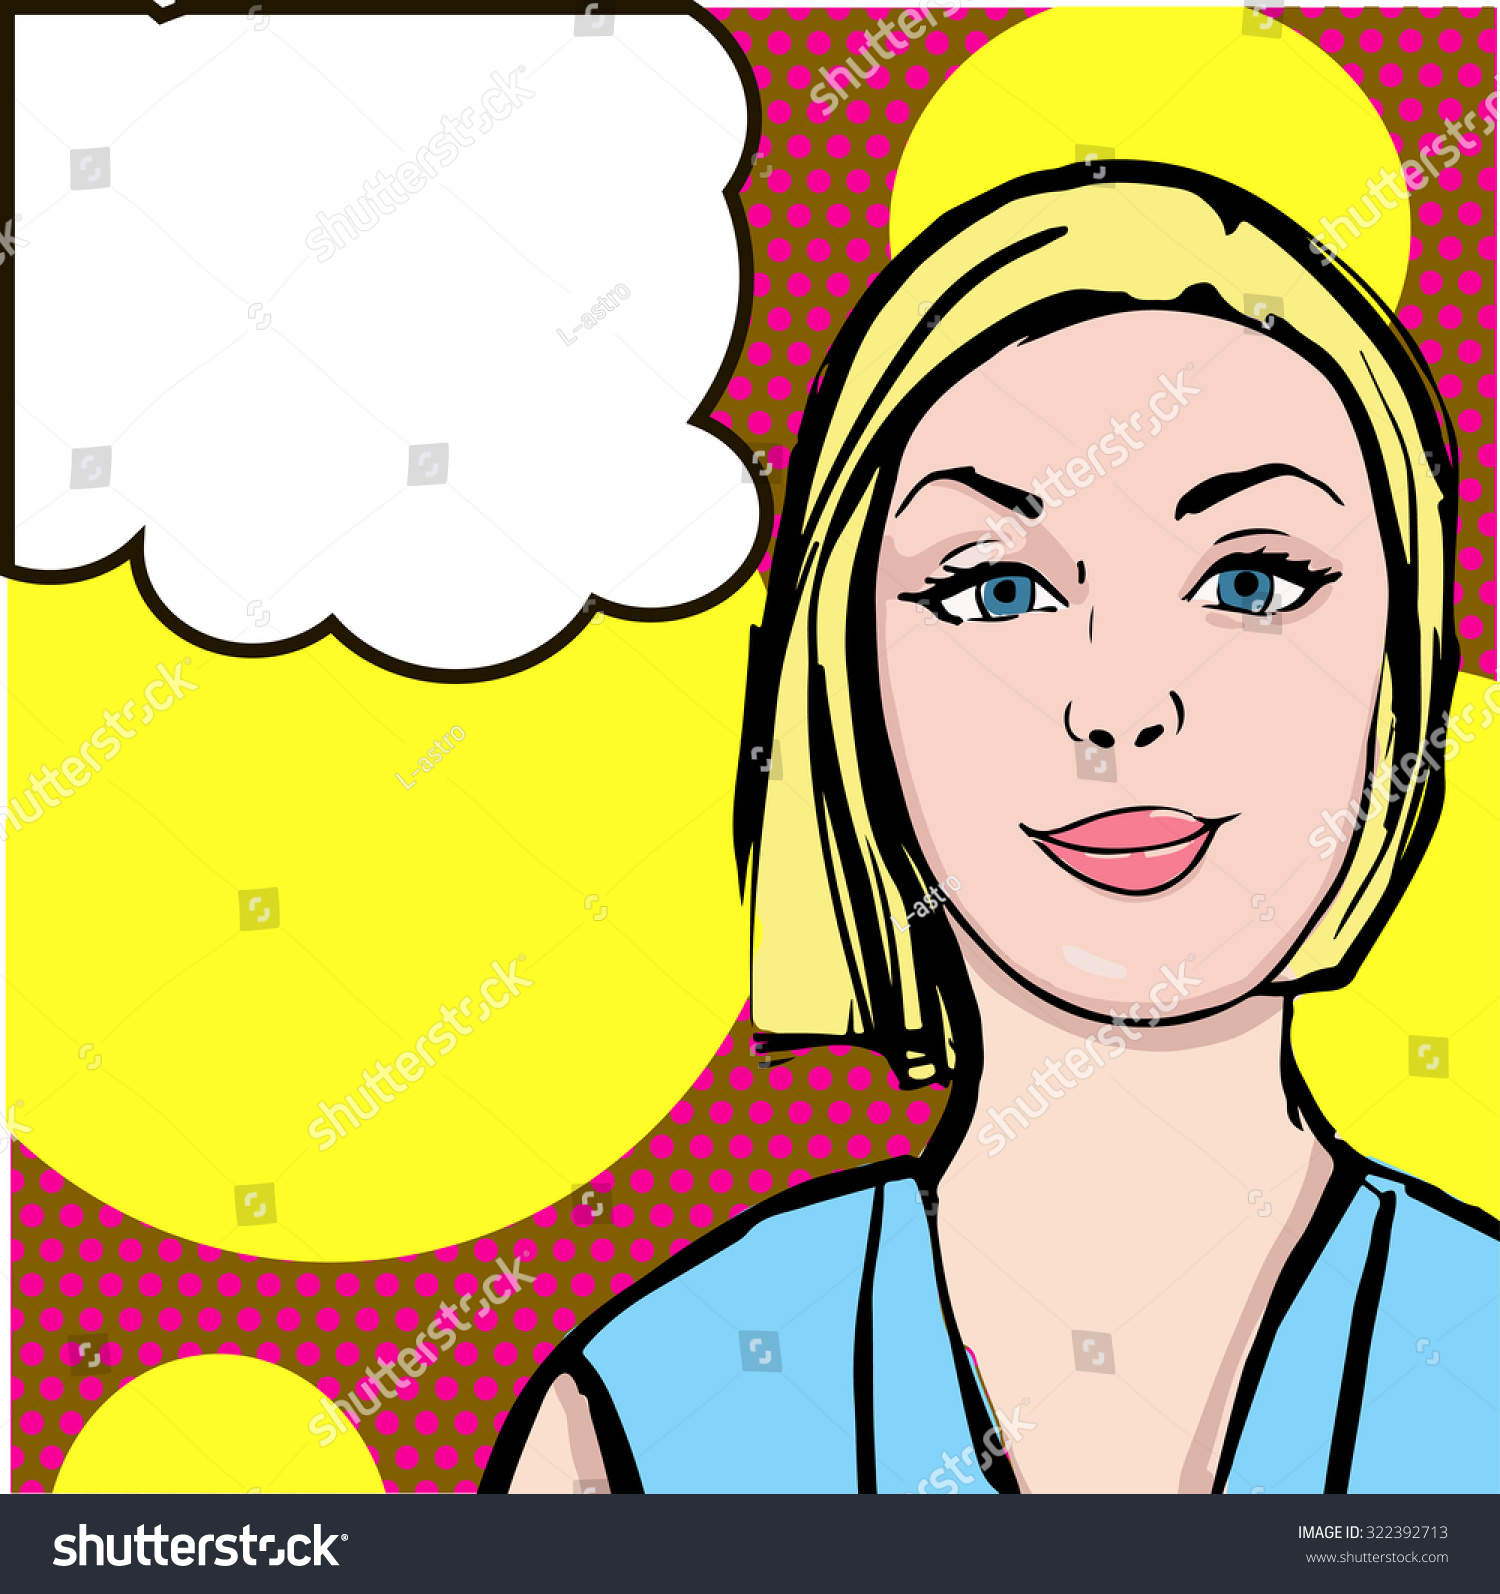 Pop Art Illustration Girl Speech Bubble Stock Vector Royalty Free 322392713 Shutterstock 6660